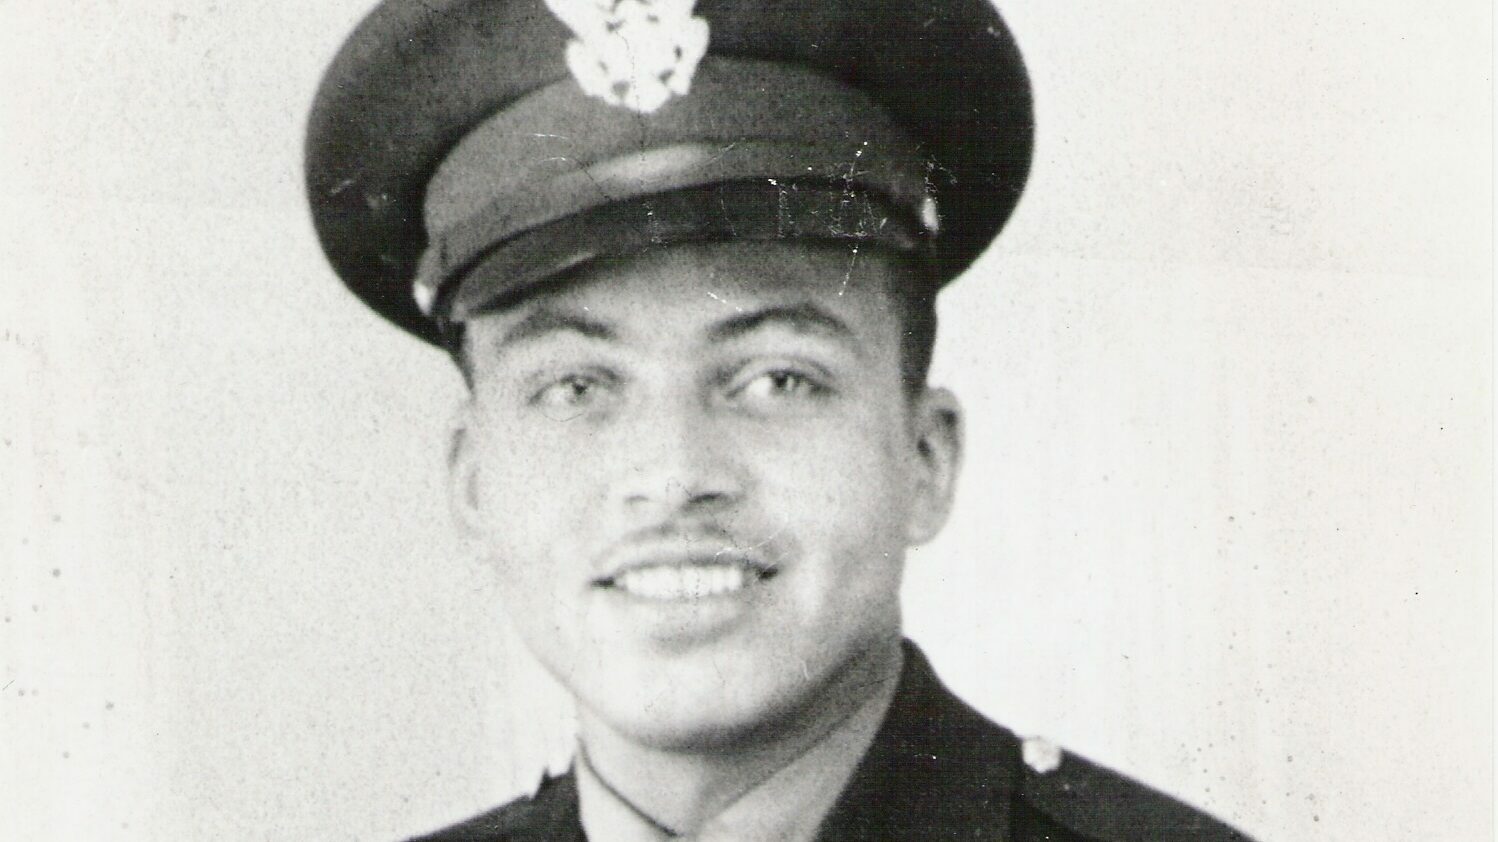 Meet Tuskegee Airman Lt. Colonel Howard Baugh